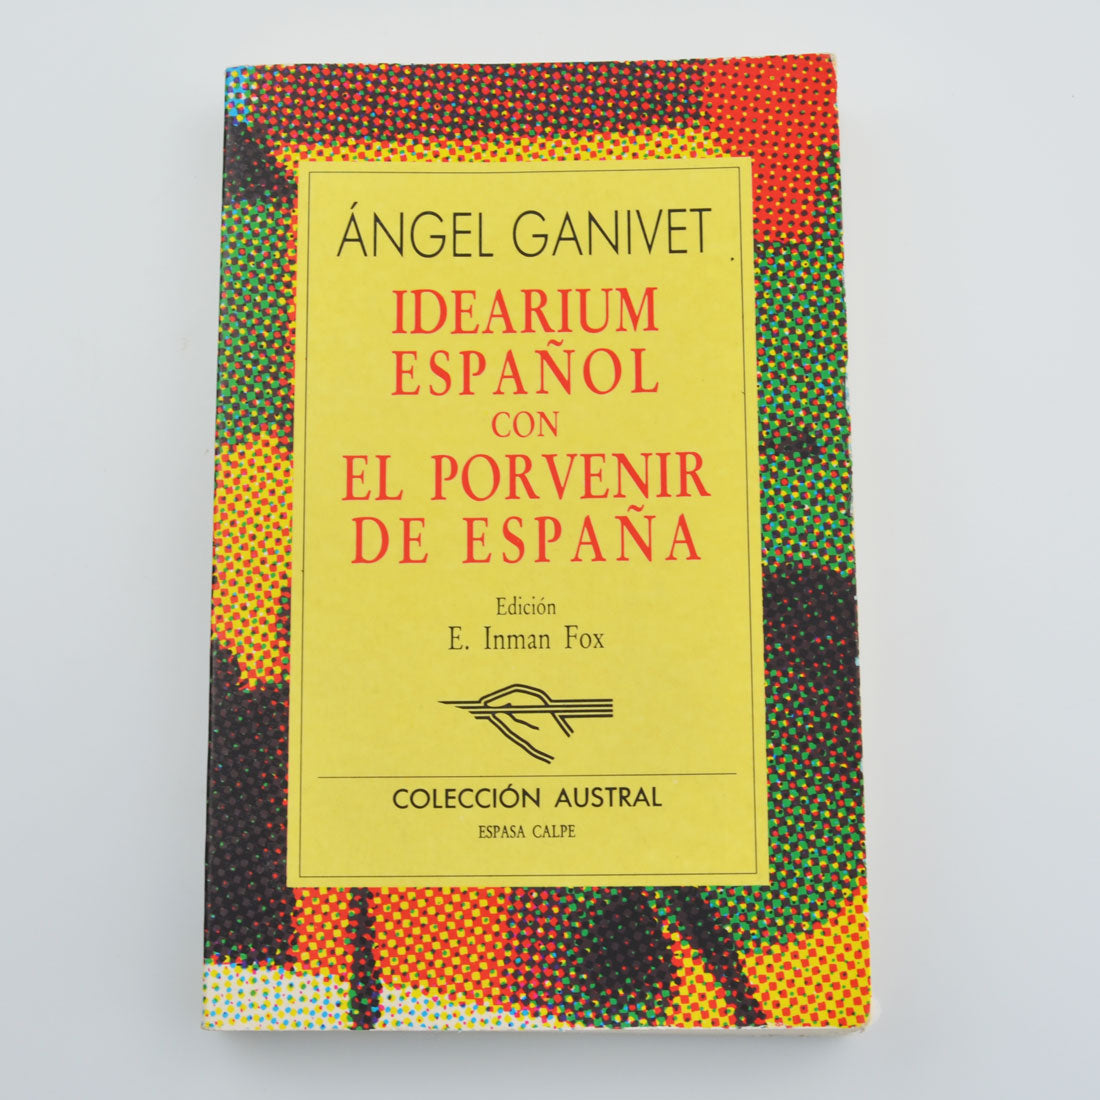 Idearium Espanol con El Porvenir de Espana by Angel Ganivet - 1990 - Spanish